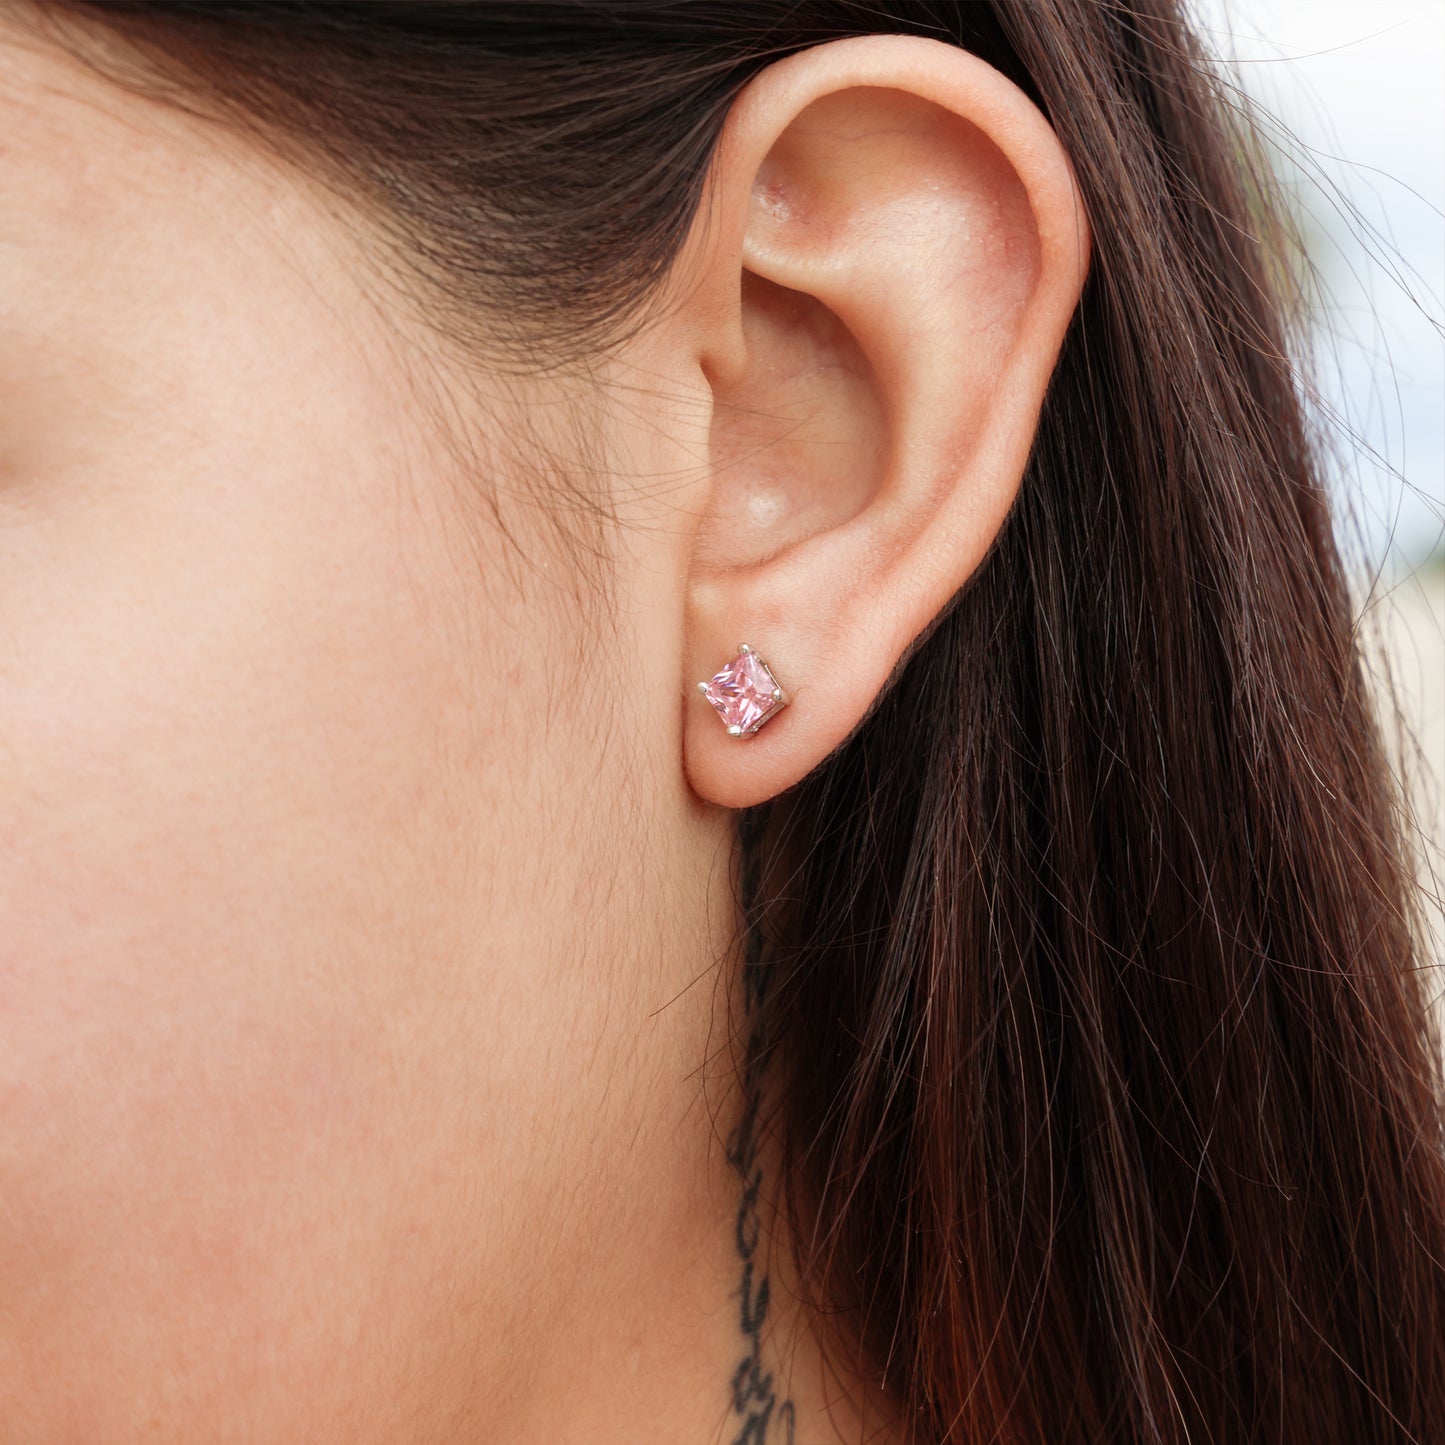 5mm Square Cut Pink CZ Stud Earrings - 925 Silver